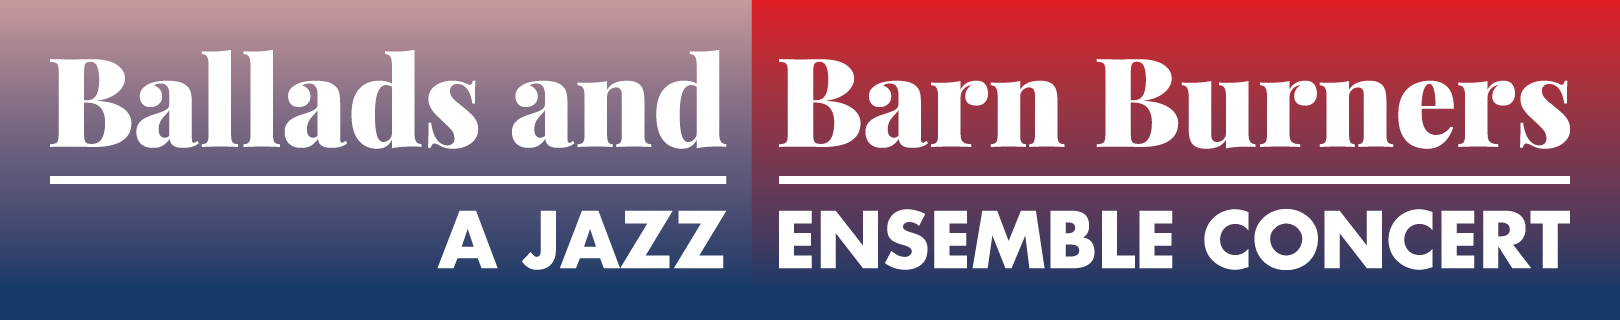 Jazz Ensemble Concert banner